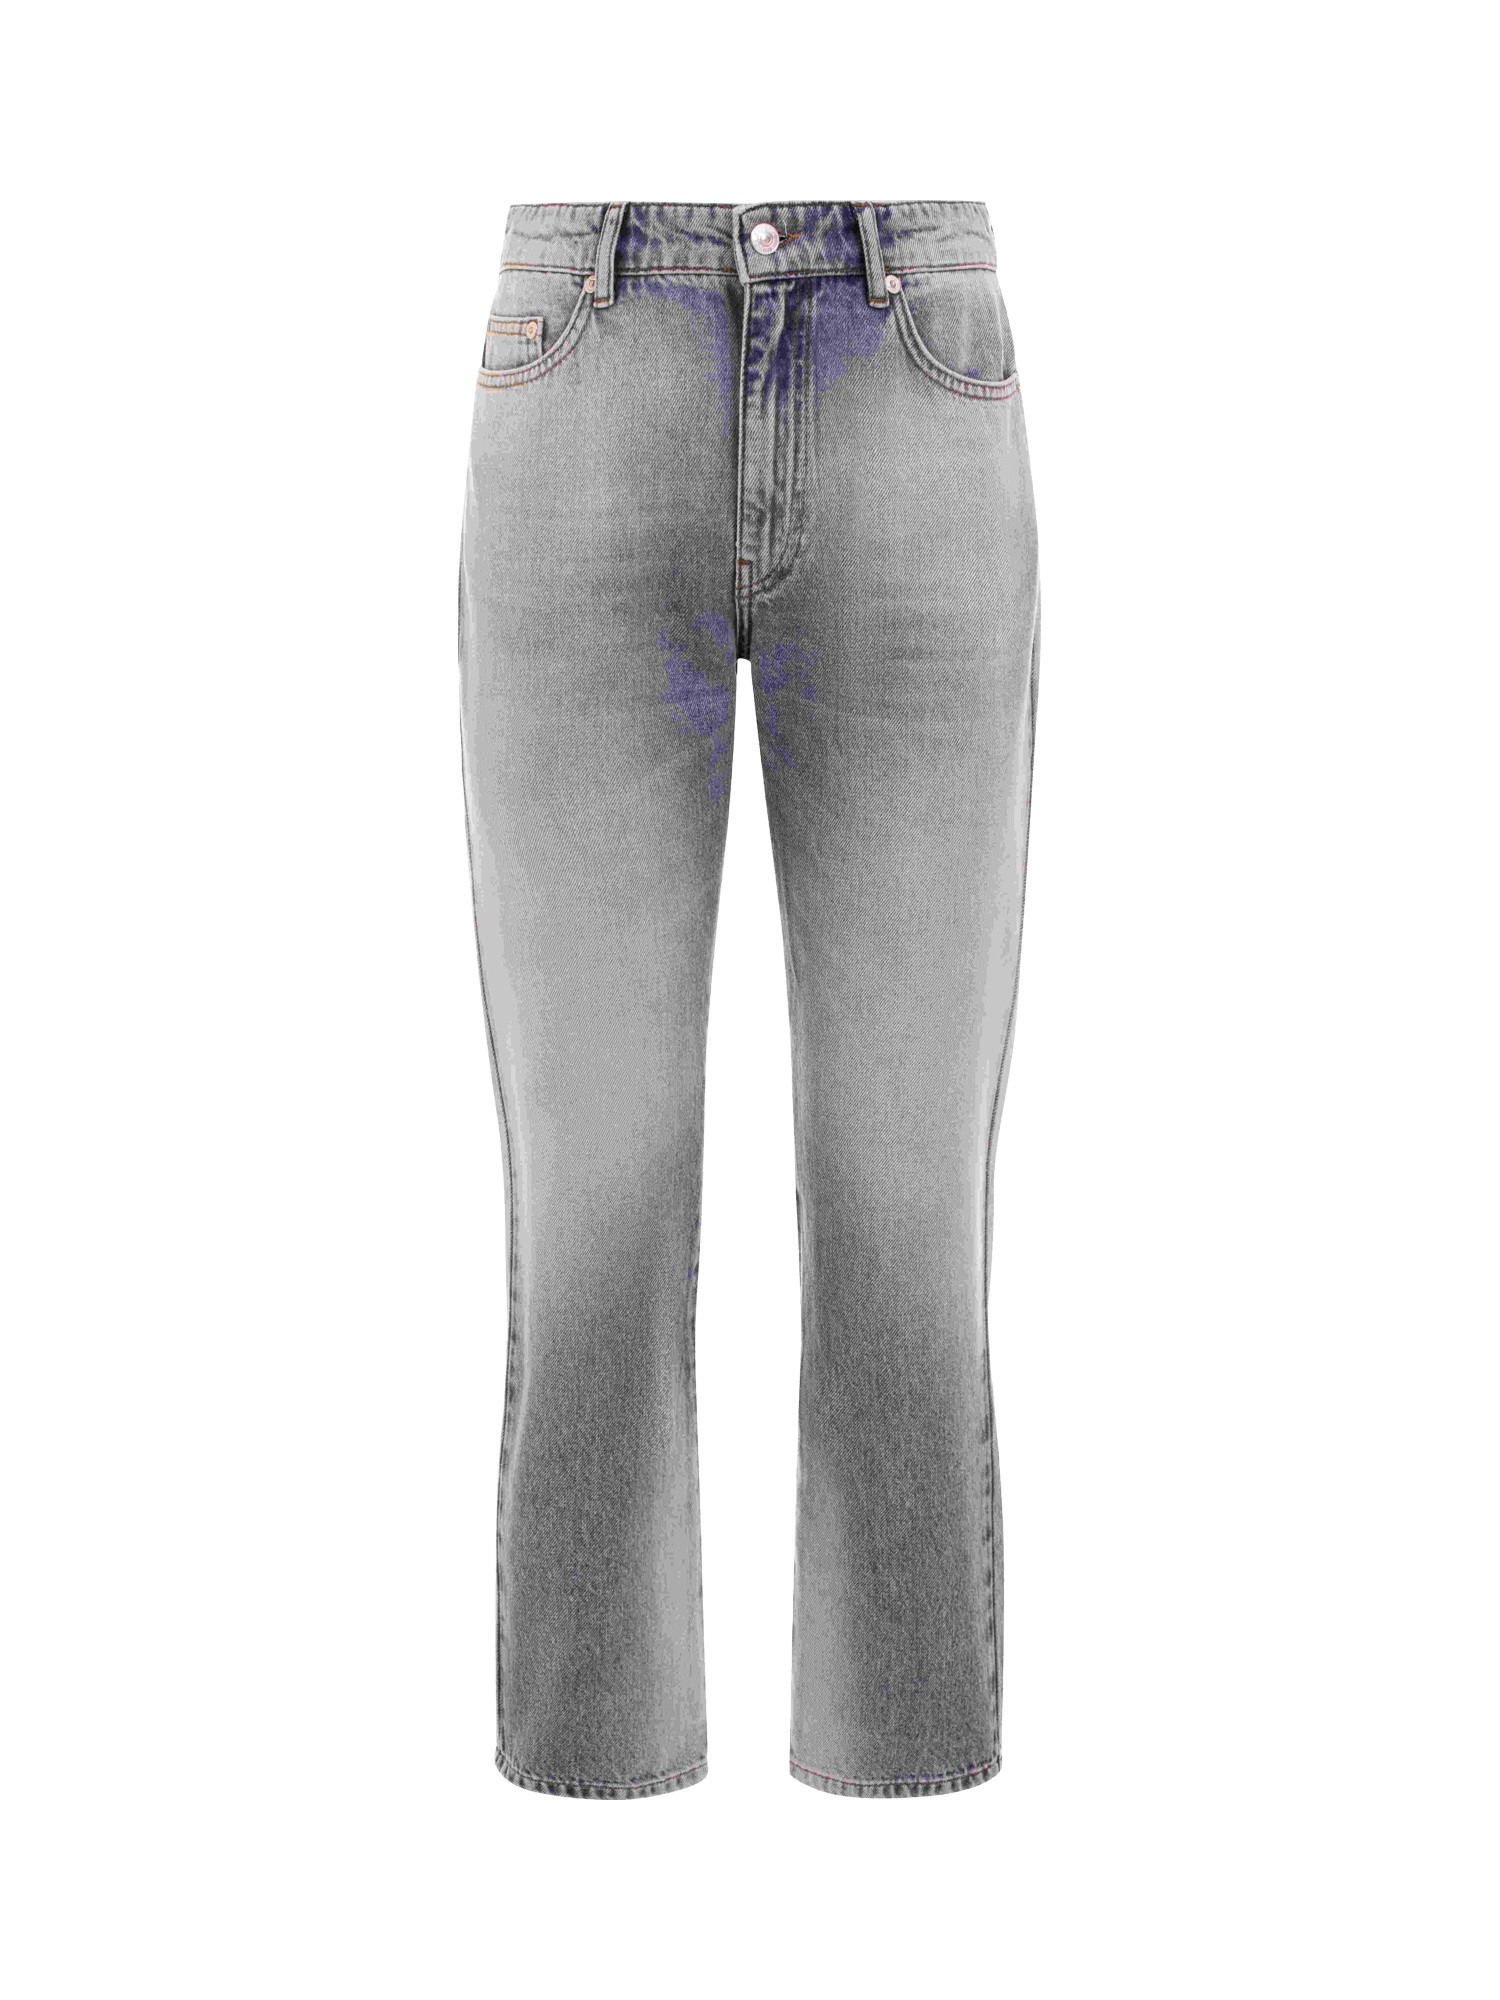 Chiara Ferragni - Jeans 5 tasche, Grigio, large image number 0